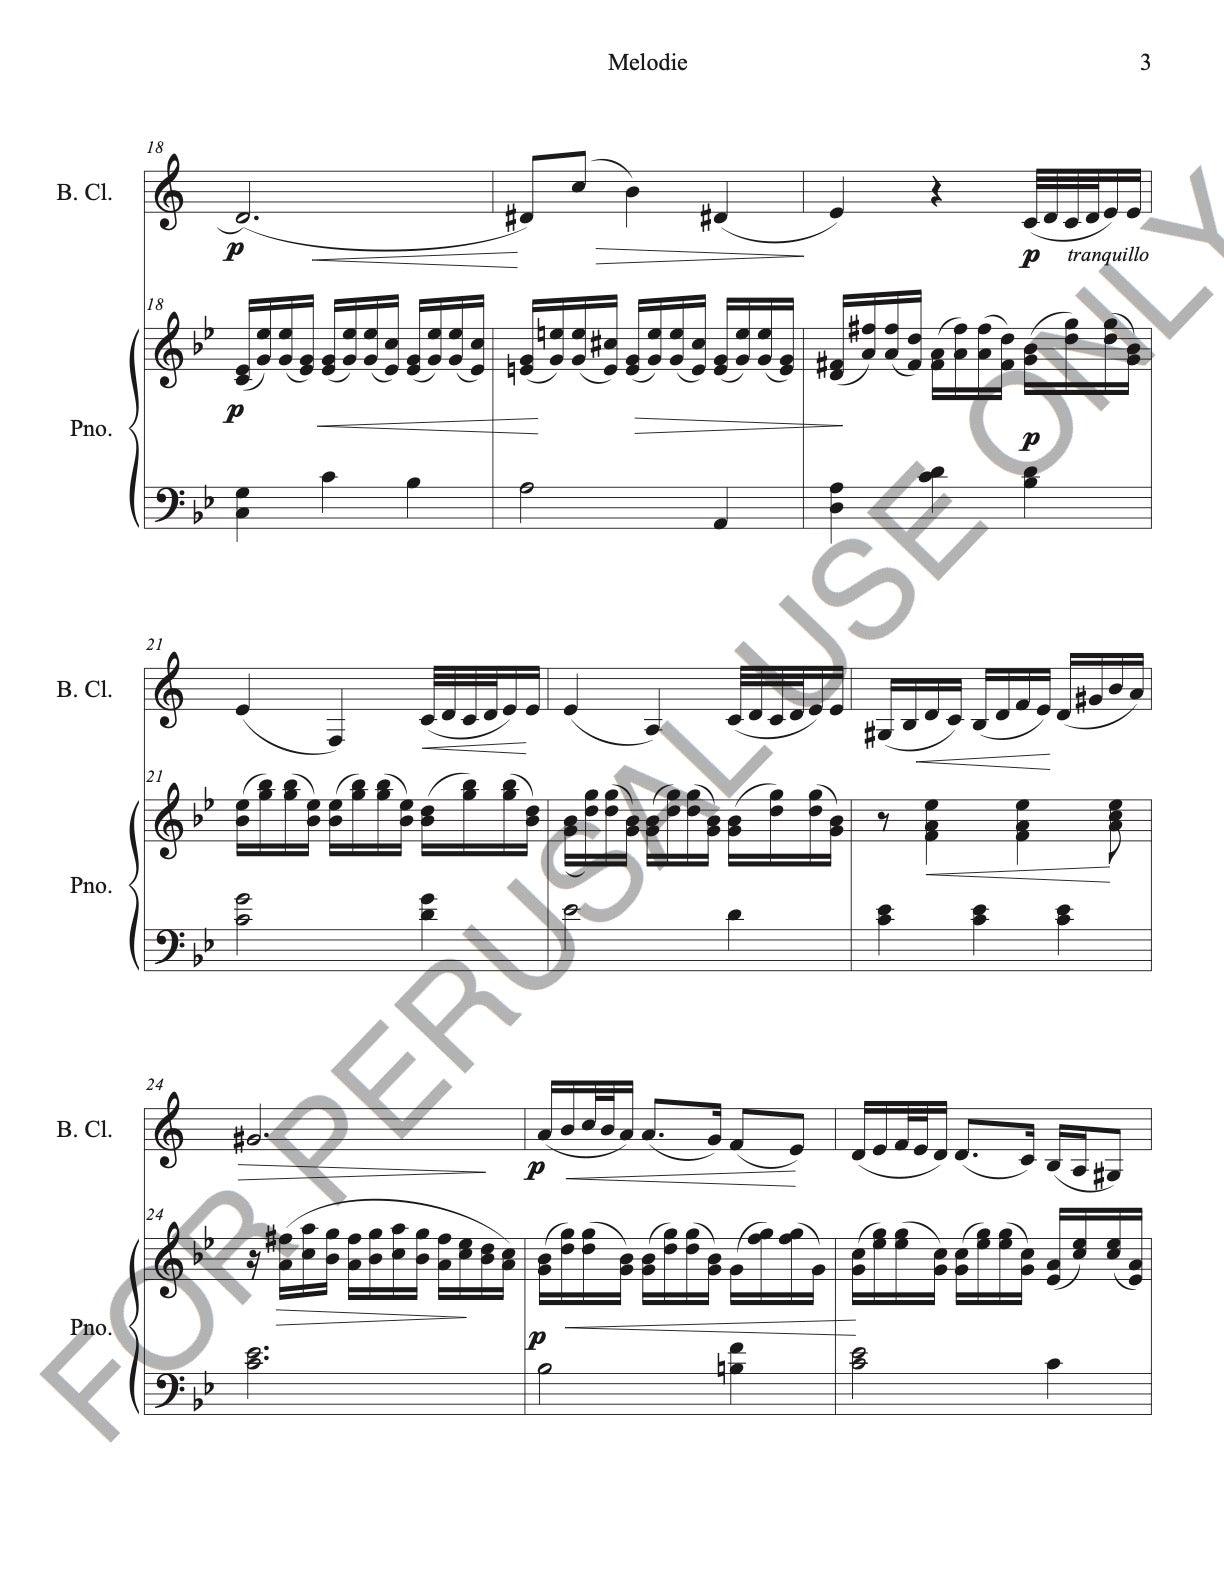 Bass Clarinet and Piano sheet music: Gluck's Melodie - ChaipruckMekara